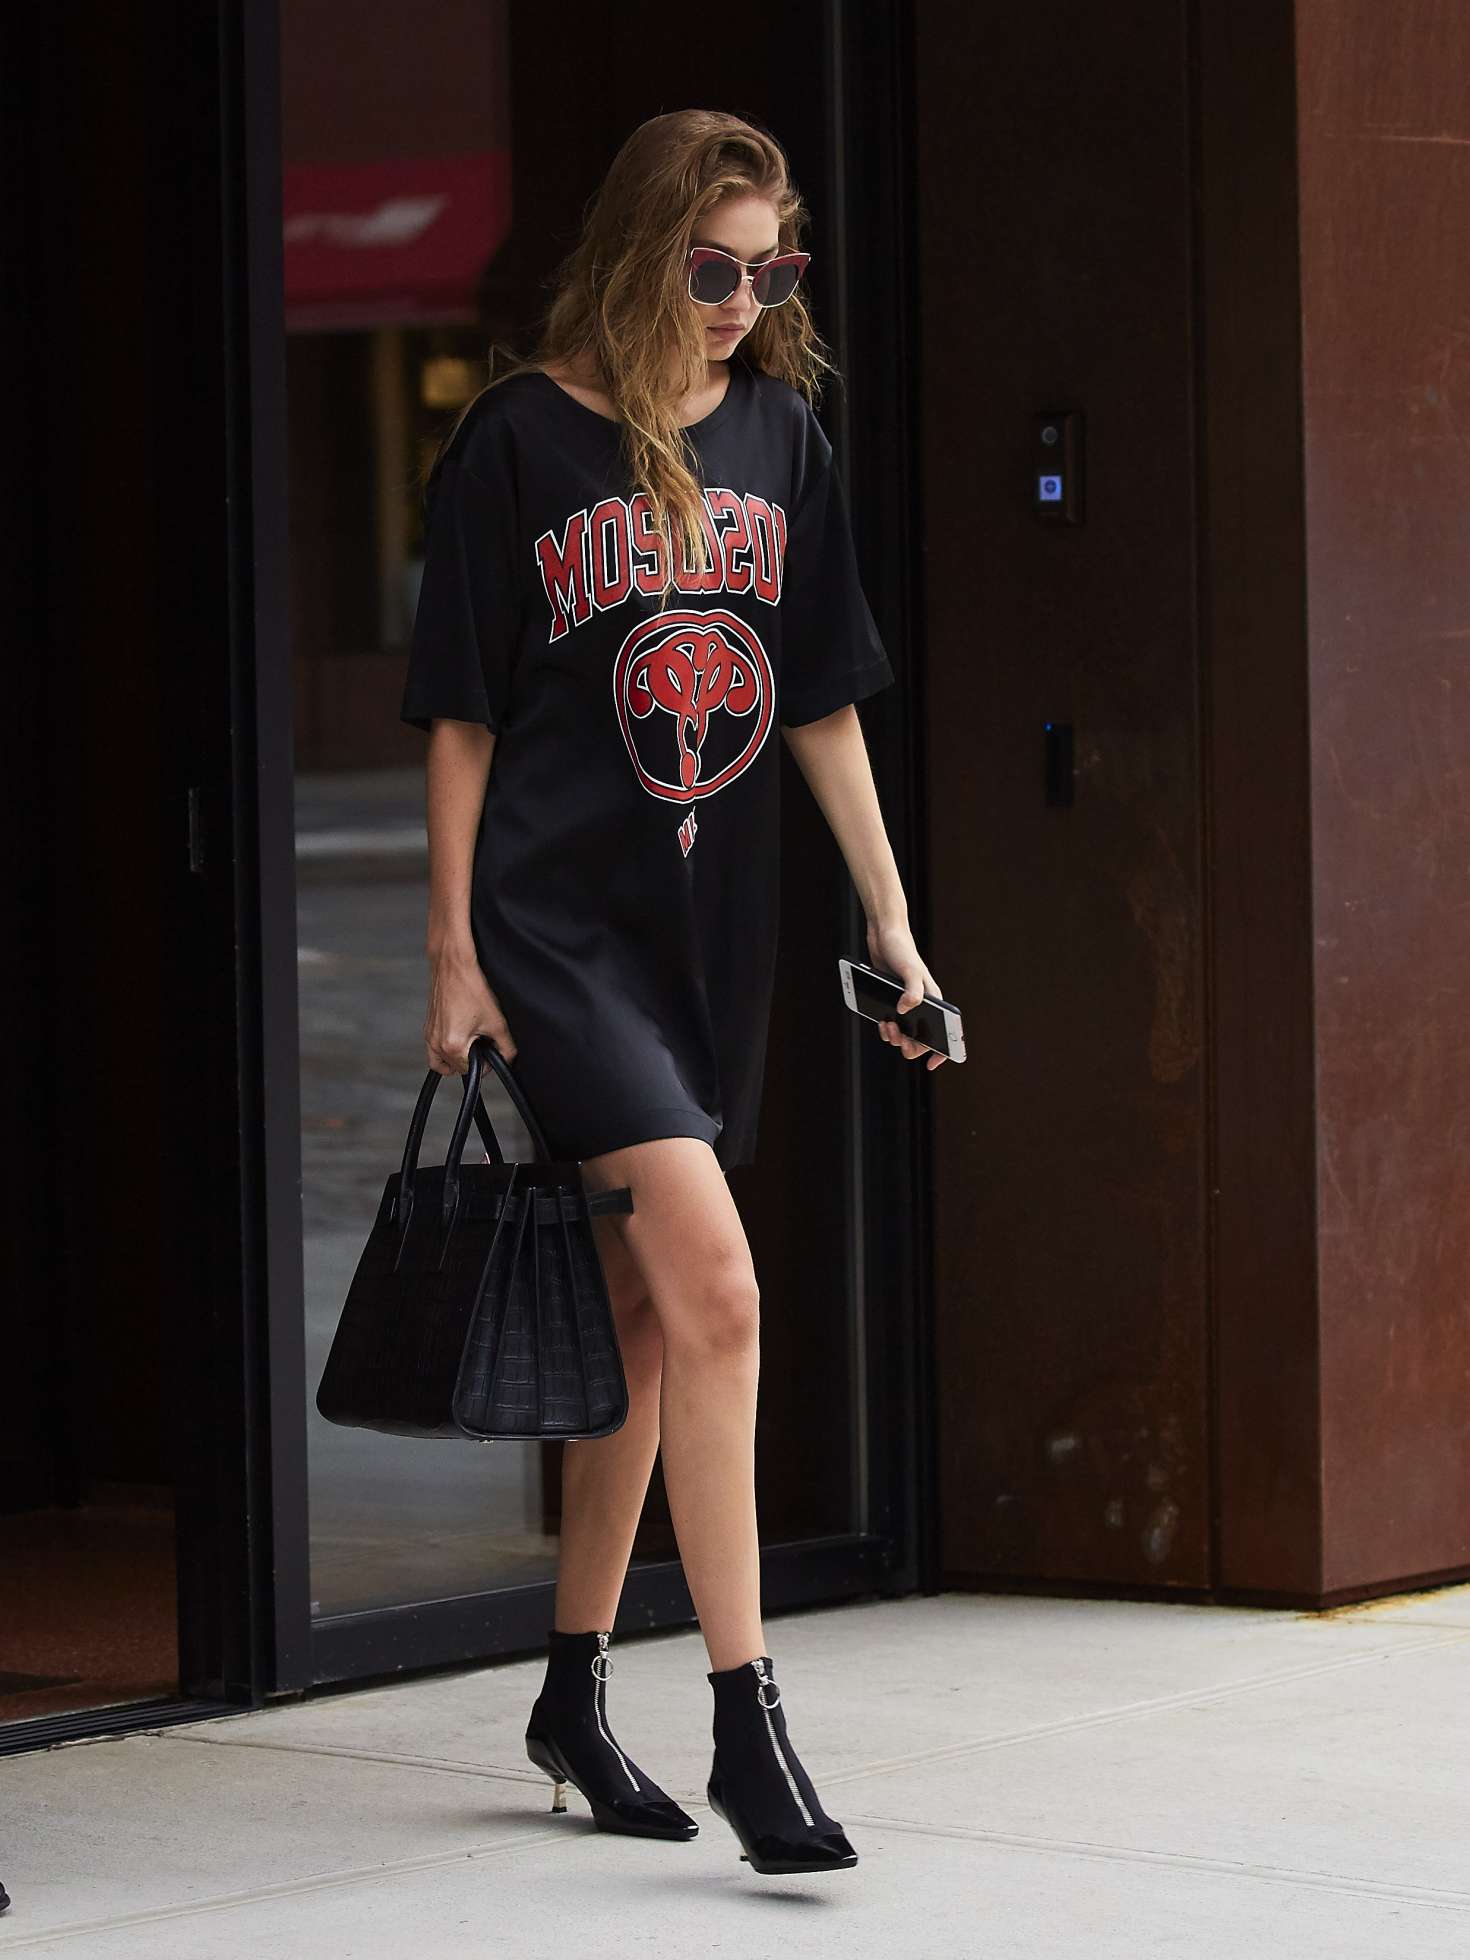 Versace - Gigi Hadid rocks the perfect street style in her #Versace  loungewear and her black #VersacePalazzoEmpire bag. #VersaceCelebrities